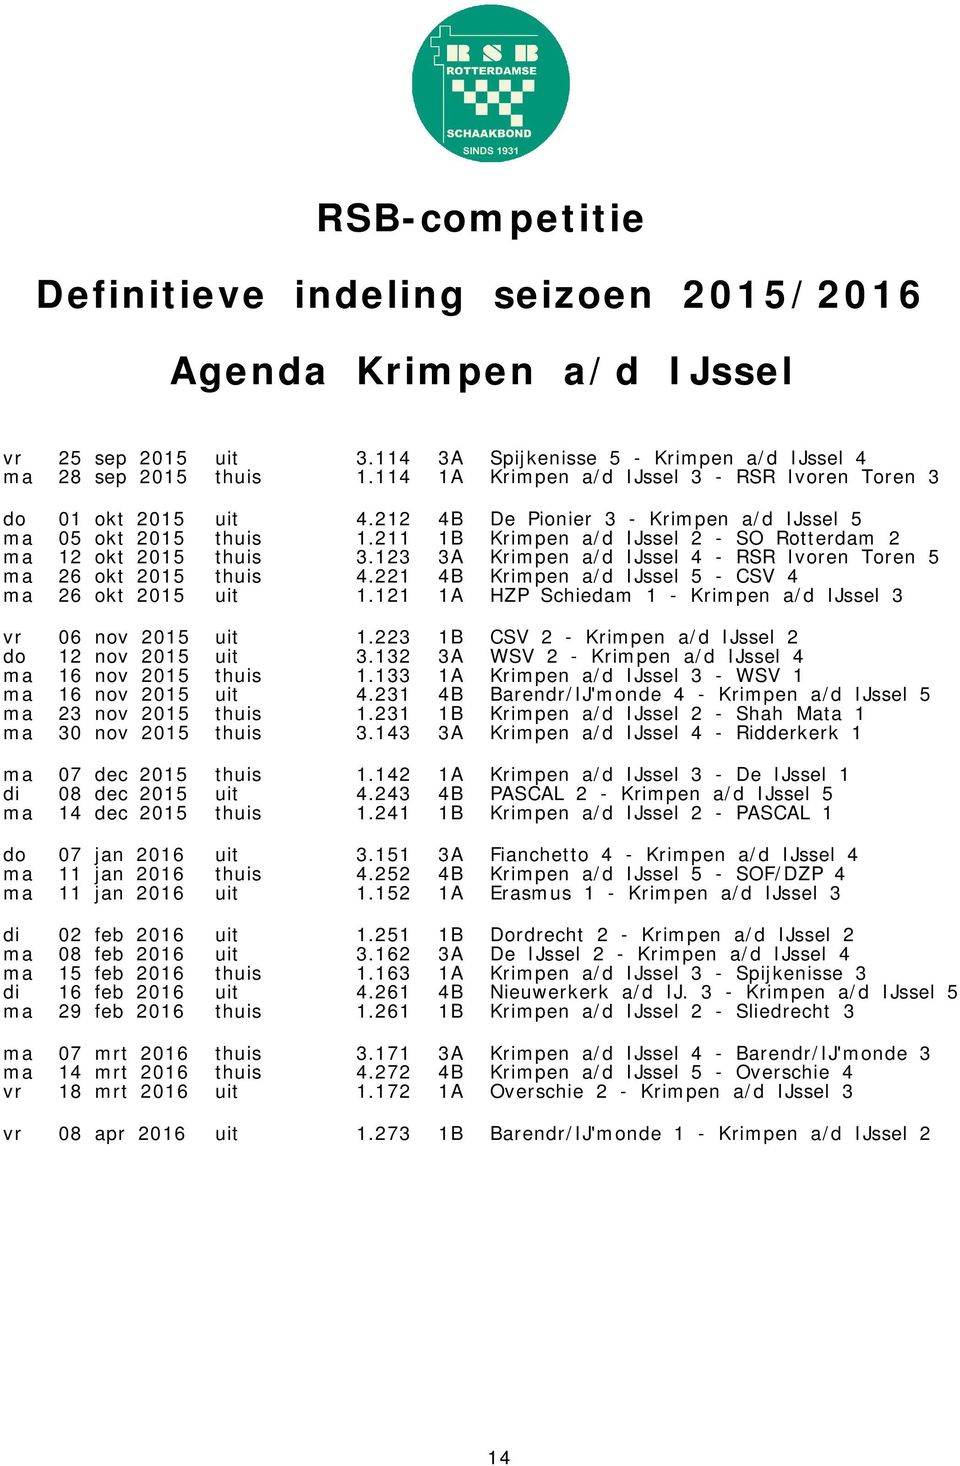 123 3A Krimpen a/d IJssel 4 - RSR Ivoren Toren 5 ma 26 okt 2015 thuis 4.221 4B Krimpen a/d IJssel 5 - CSV 4 ma 26 okt 2015 uit 1.121 1A HZP Schiedam 1 - Krimpen a/d IJssel 3 vr 06 nov 2015 uit 1.